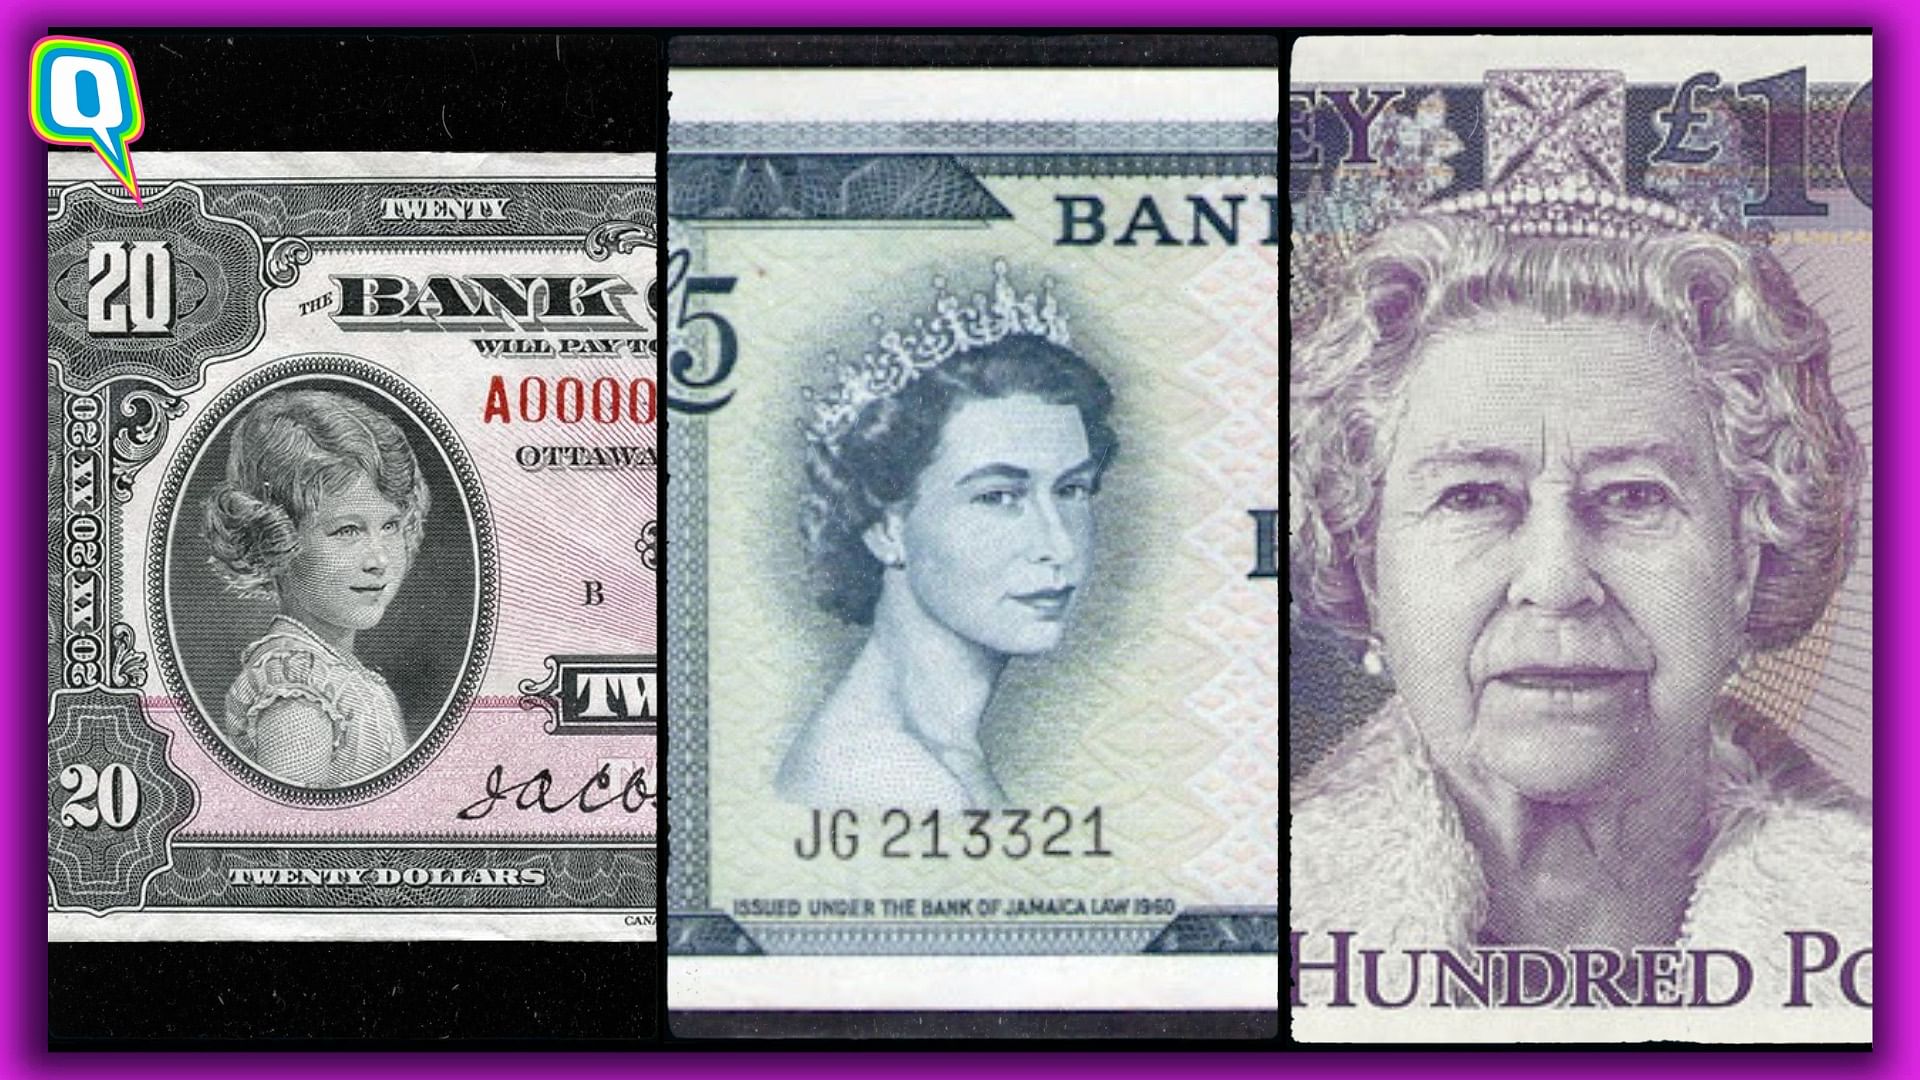 <div class="paragraphs"><p>Queen Elizabeth II"s heritage through 15 banknotes.</p></div>